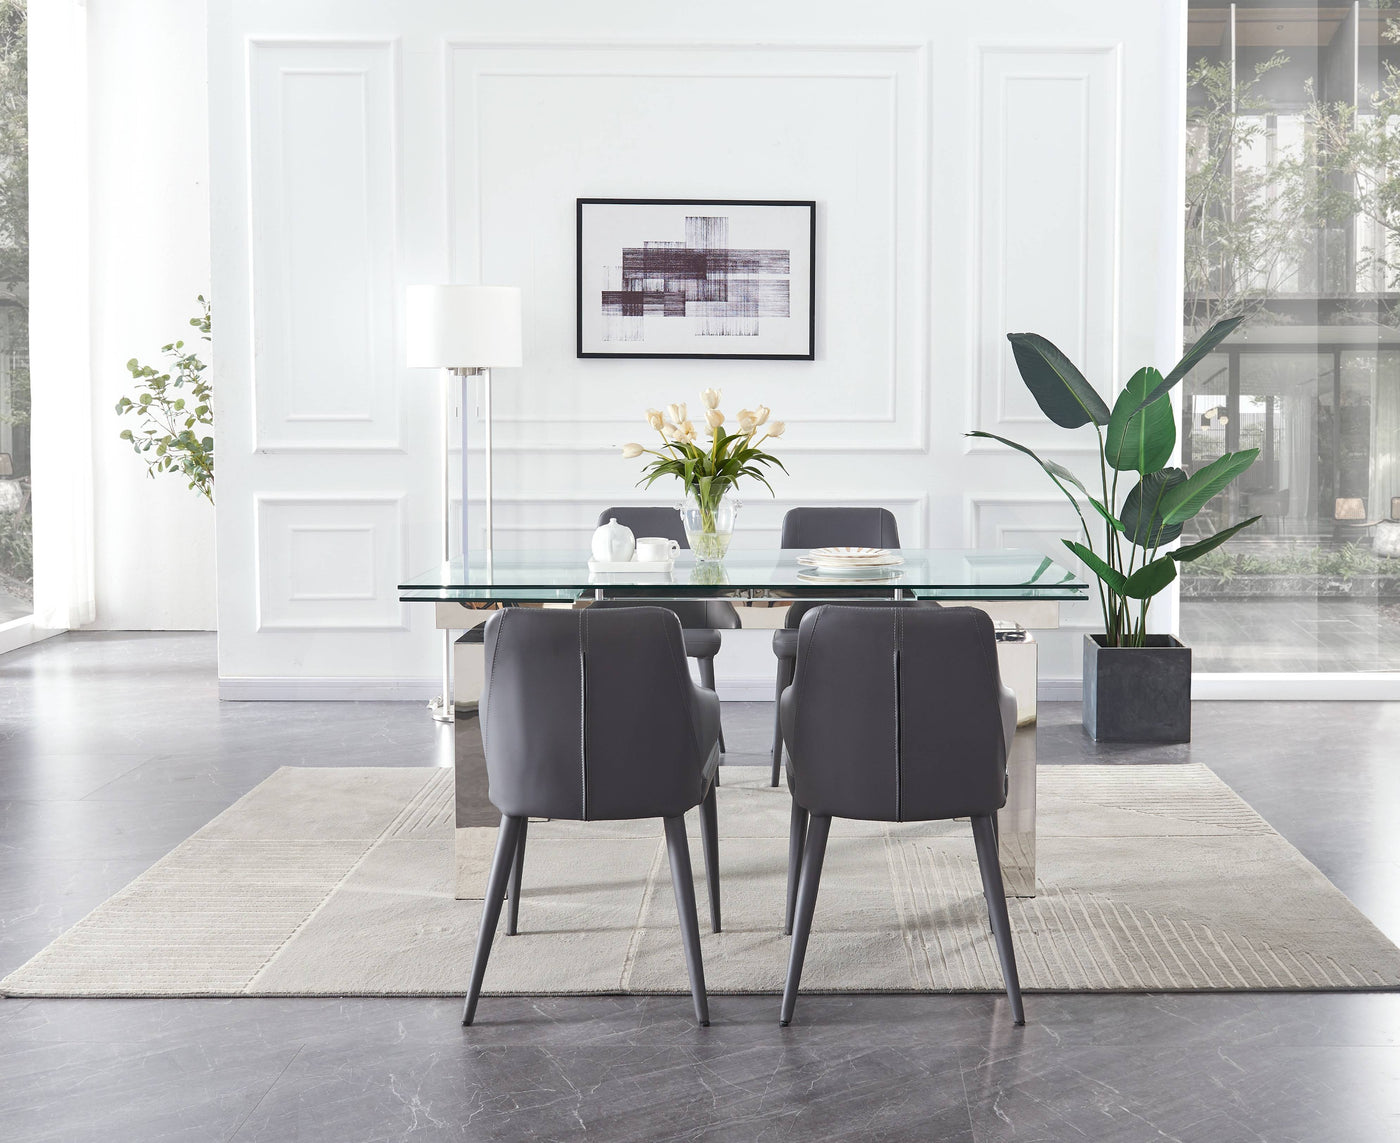 Moda Extendable Dining Table-Dining Tables-Jennifer Furniture